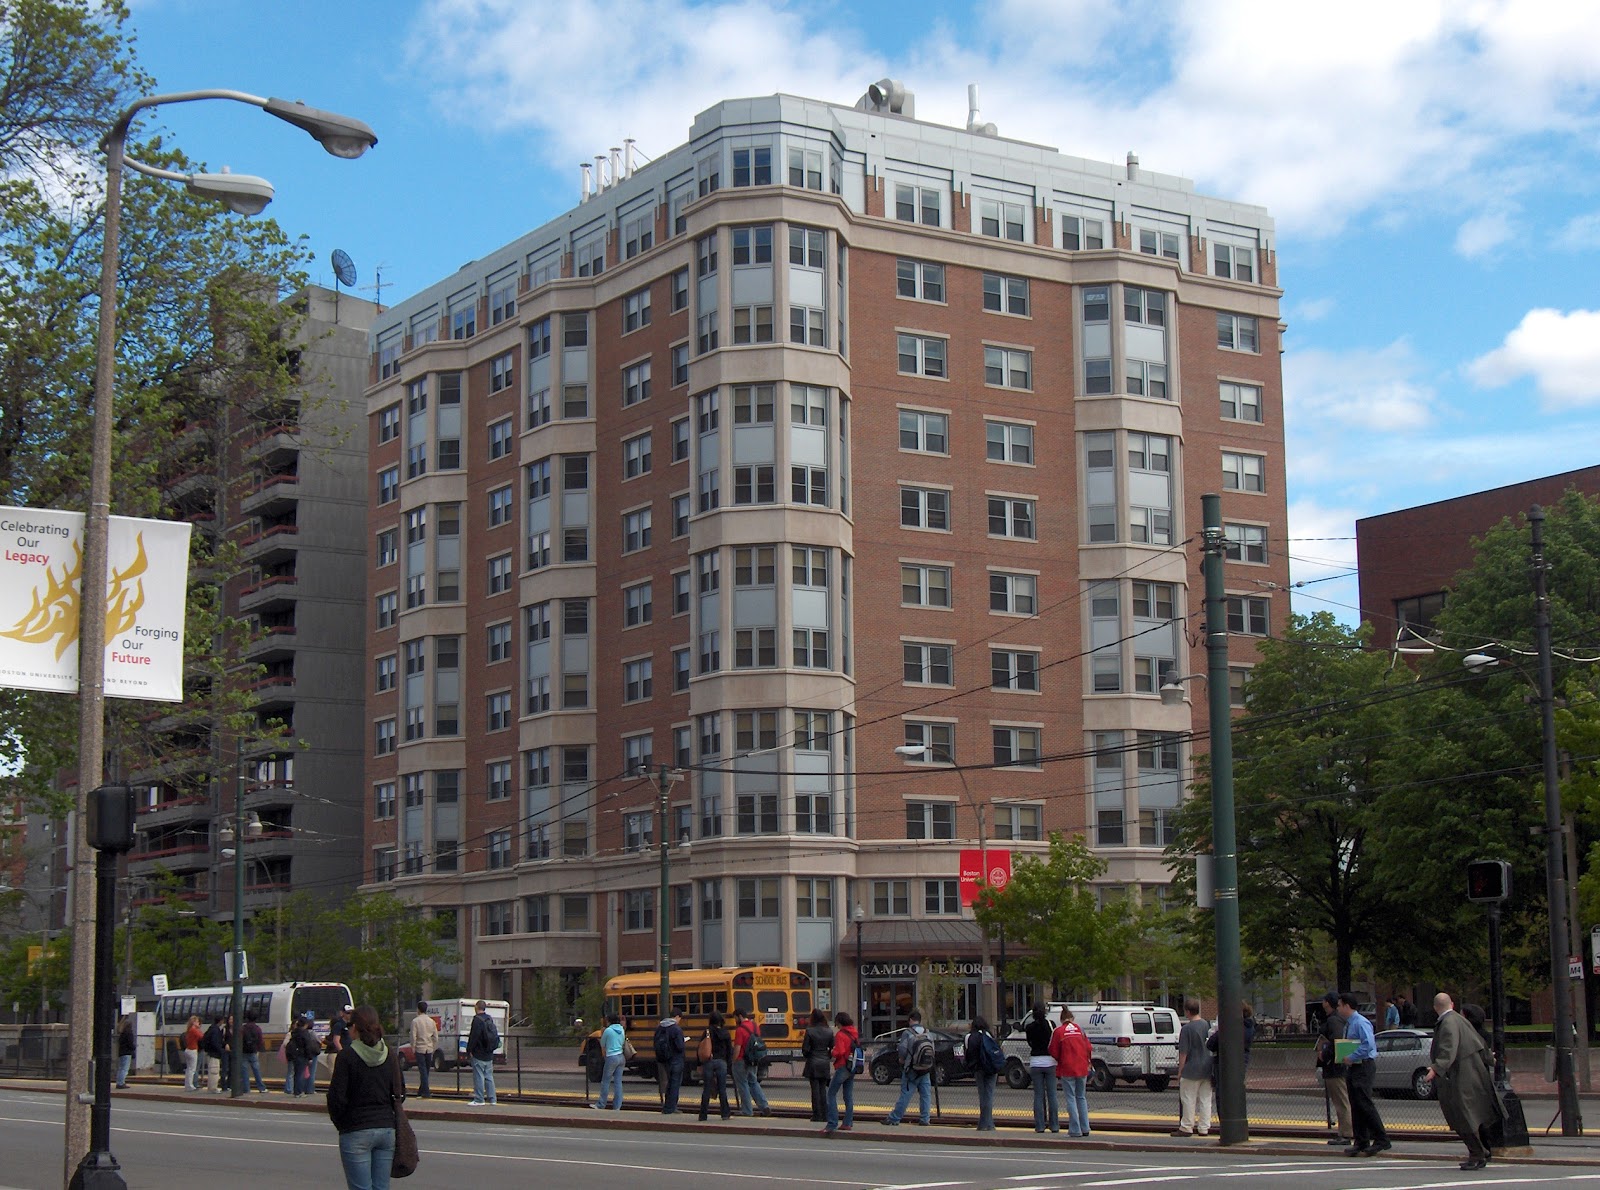 Boston University graduate housing at 580 Commonwealth Avenue. 